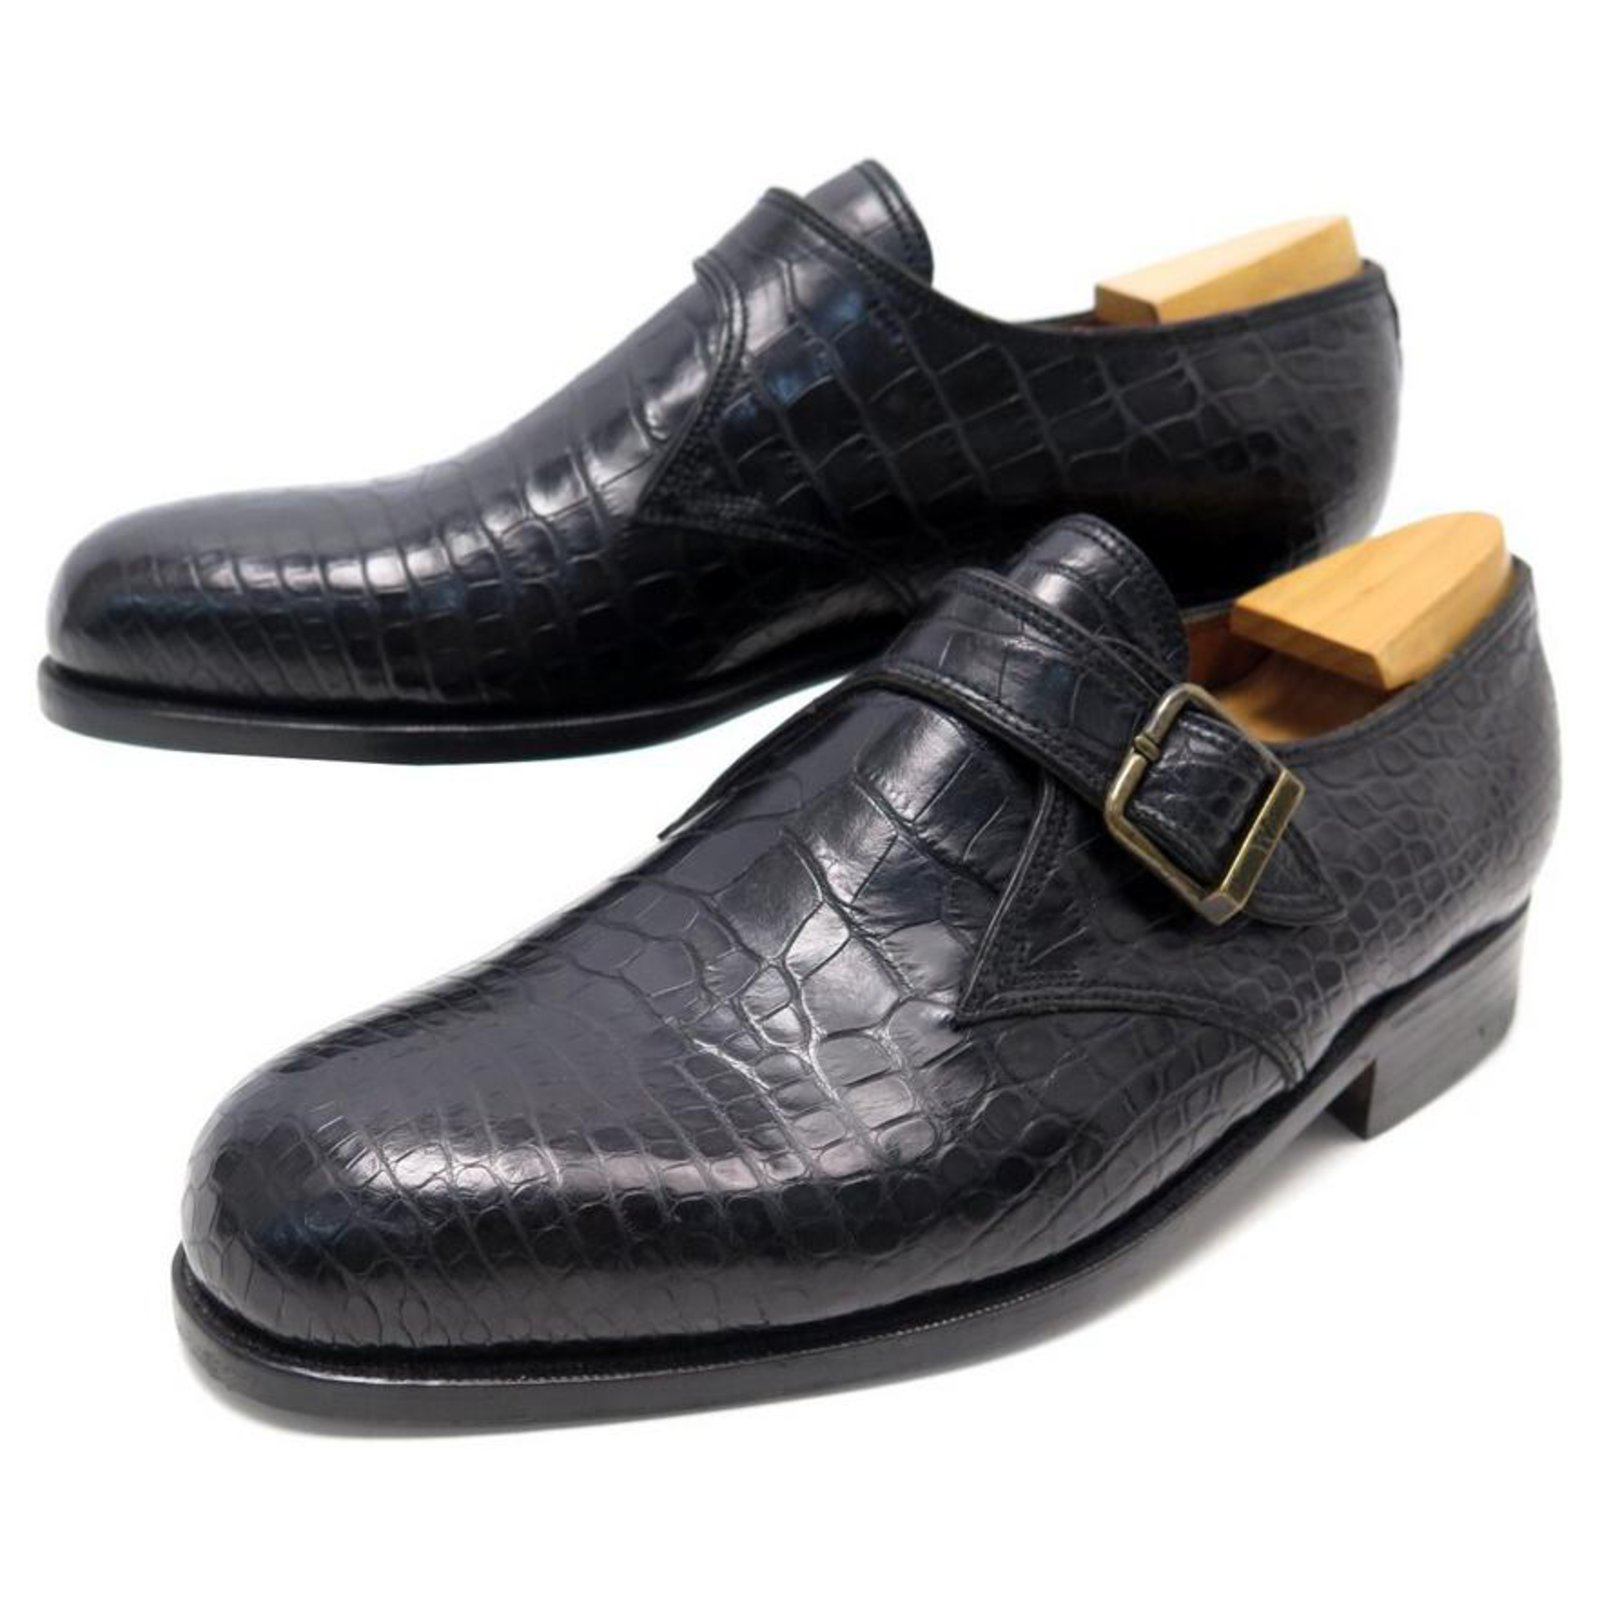 Jm Weston Shoes Crocodile Skin Price Online | bellvalefarms.com